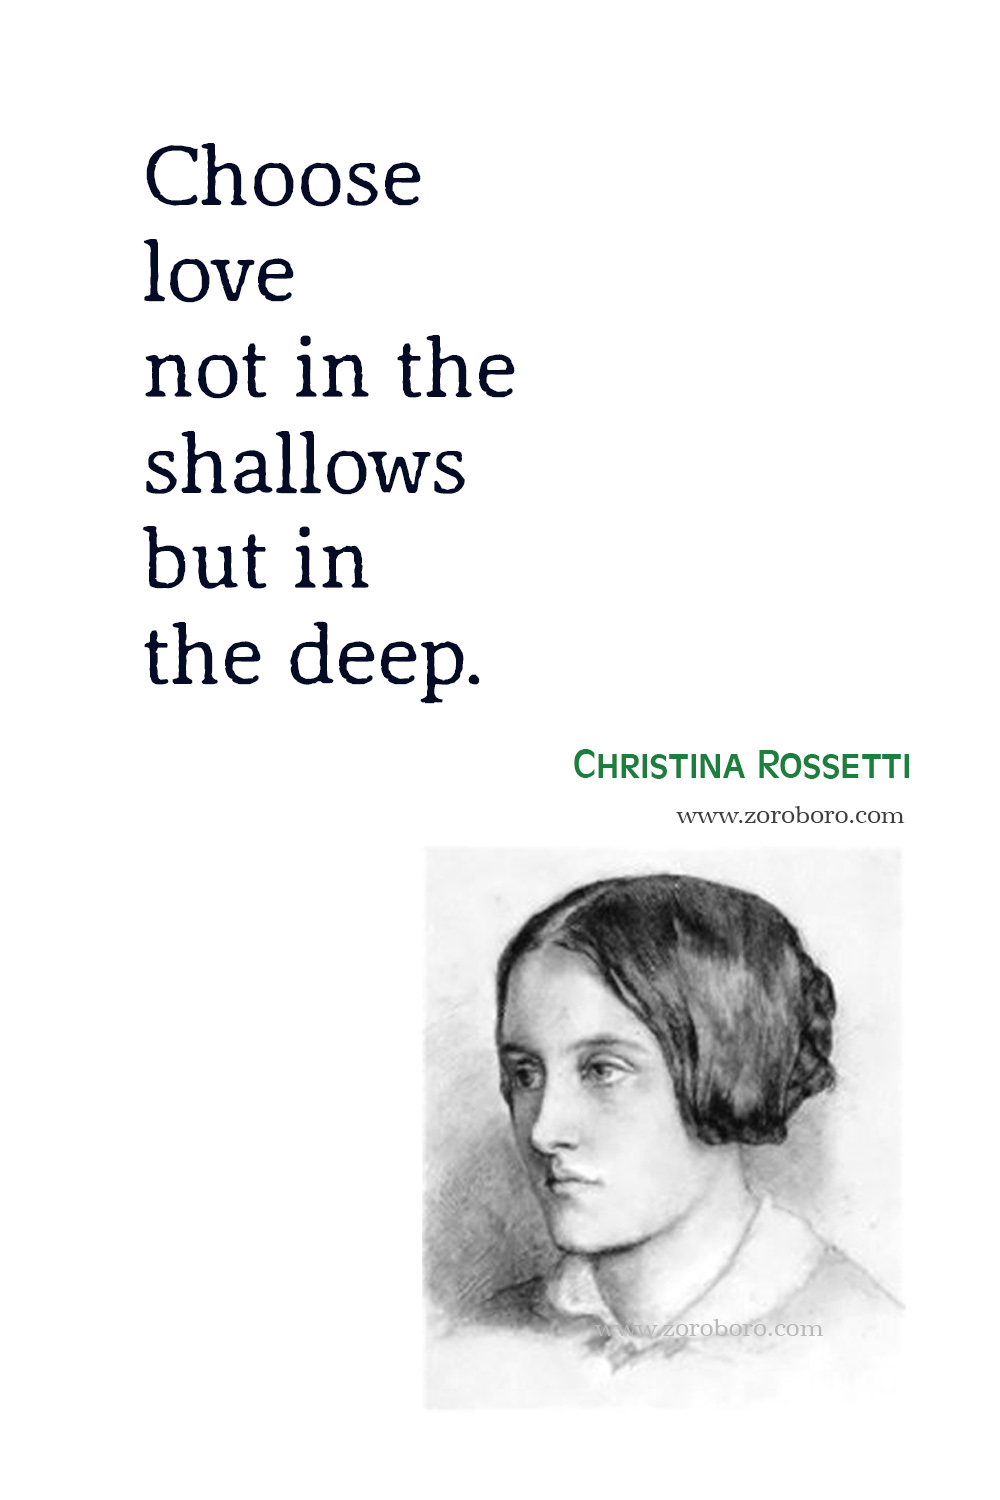 Christina Rossetti Quotes, Christina Rossetti Poems, Christina Rossetti Poetry, Christina Rossetti Books, Christina Rossetti Love Poems.